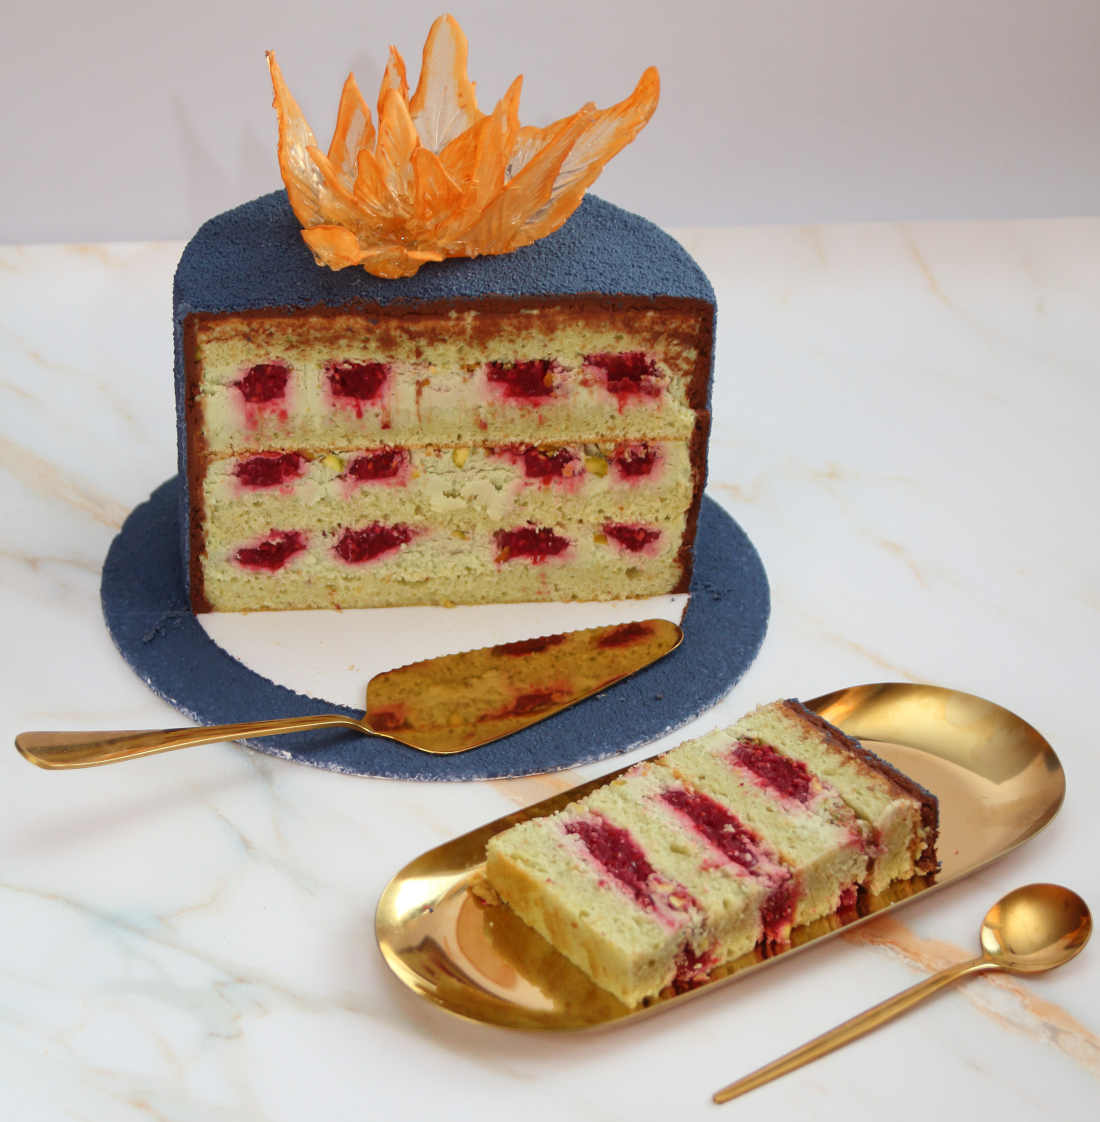 teal blue gold ball modern wedding cake with unique isomalt cake topper |  Beautiful cake designs, Unique birthday cakes, Mini wedding cakes